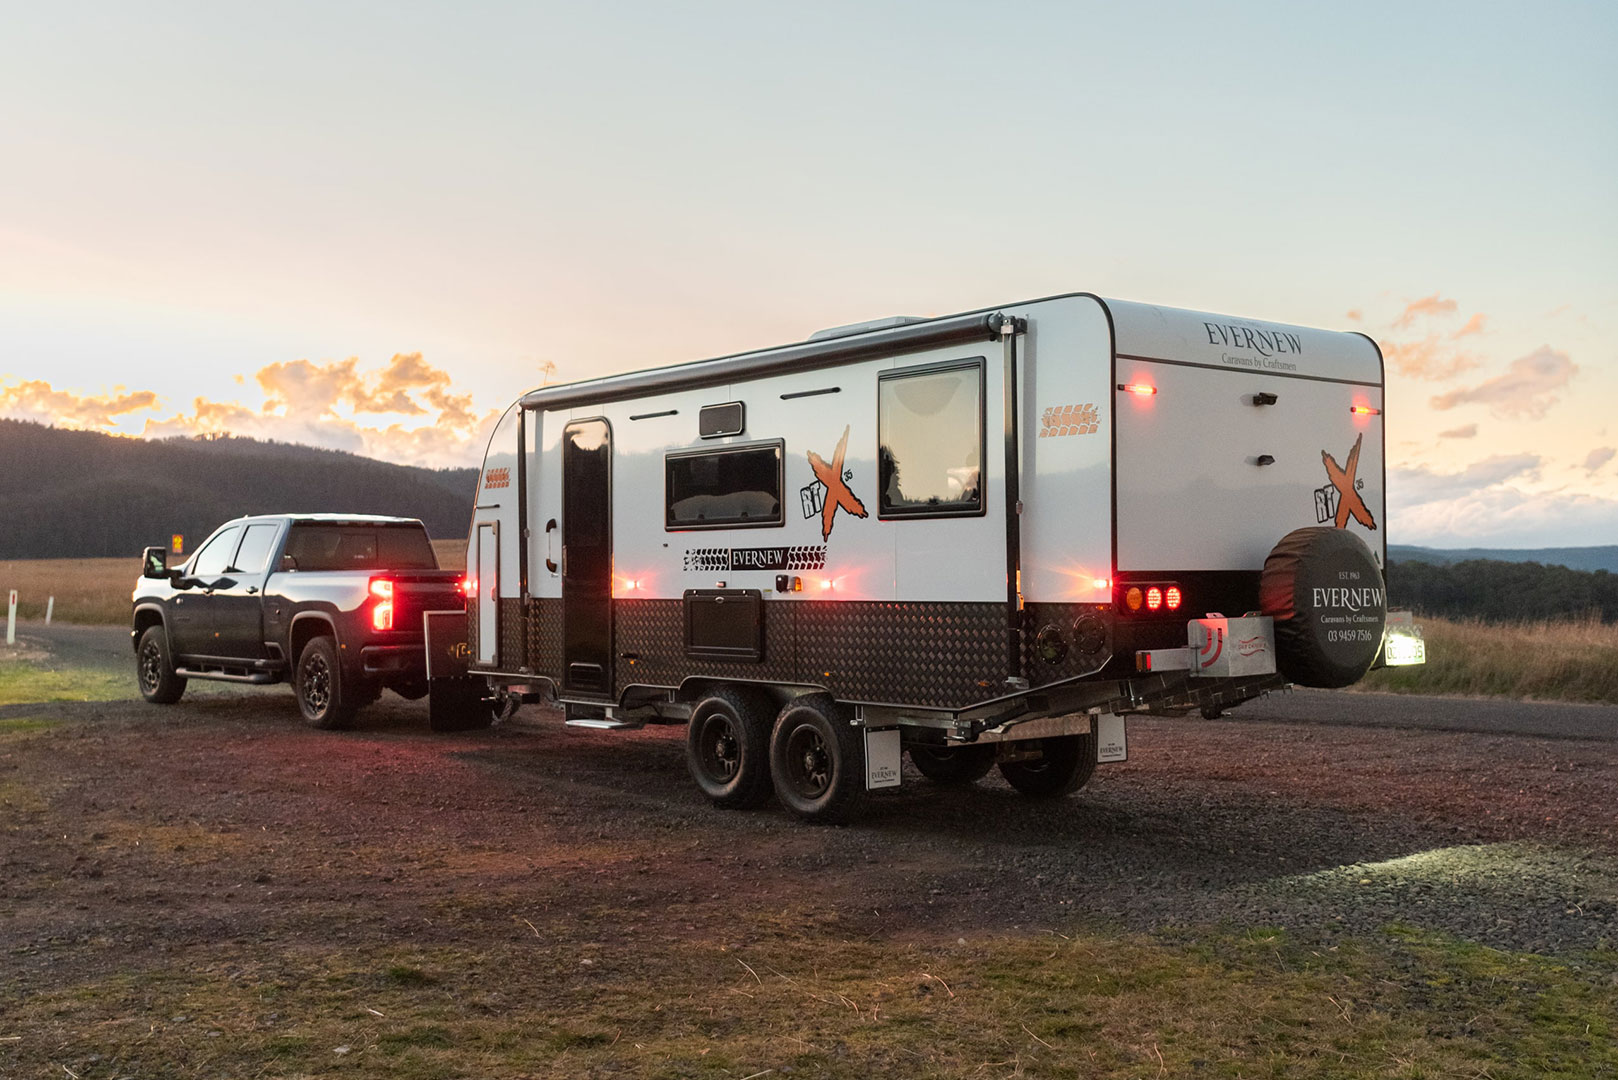 Review:  Caravan World Reviews the Evernew RTX35 a Truely Gas-Less Caravan